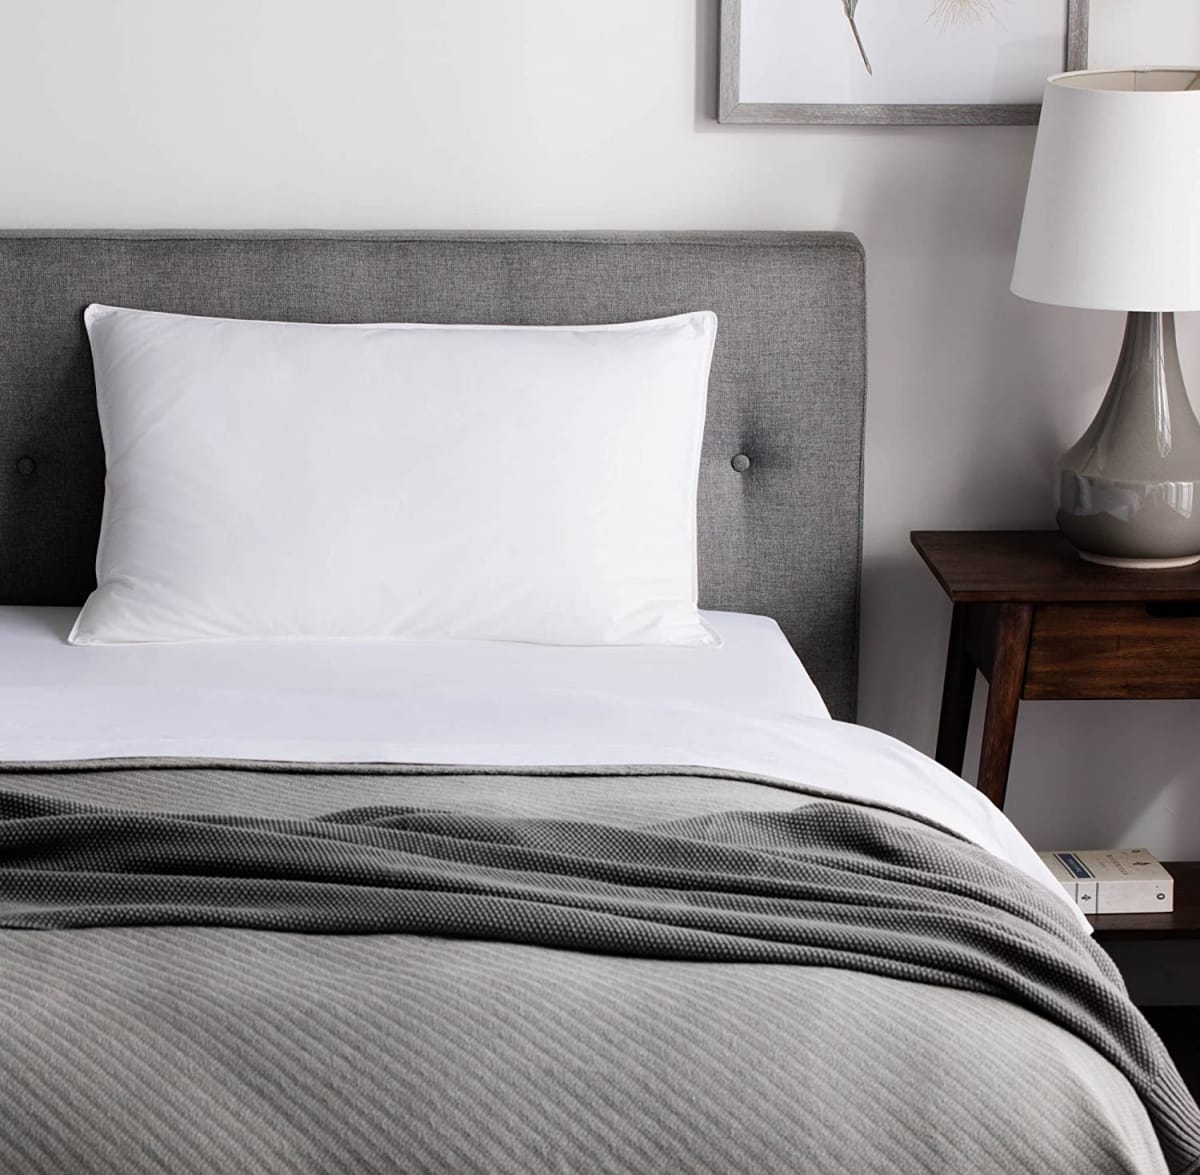 WEEKENDER Down Alternative Hotel Quality 100% Cotton Cover-Soft Hypoallergenic Standard